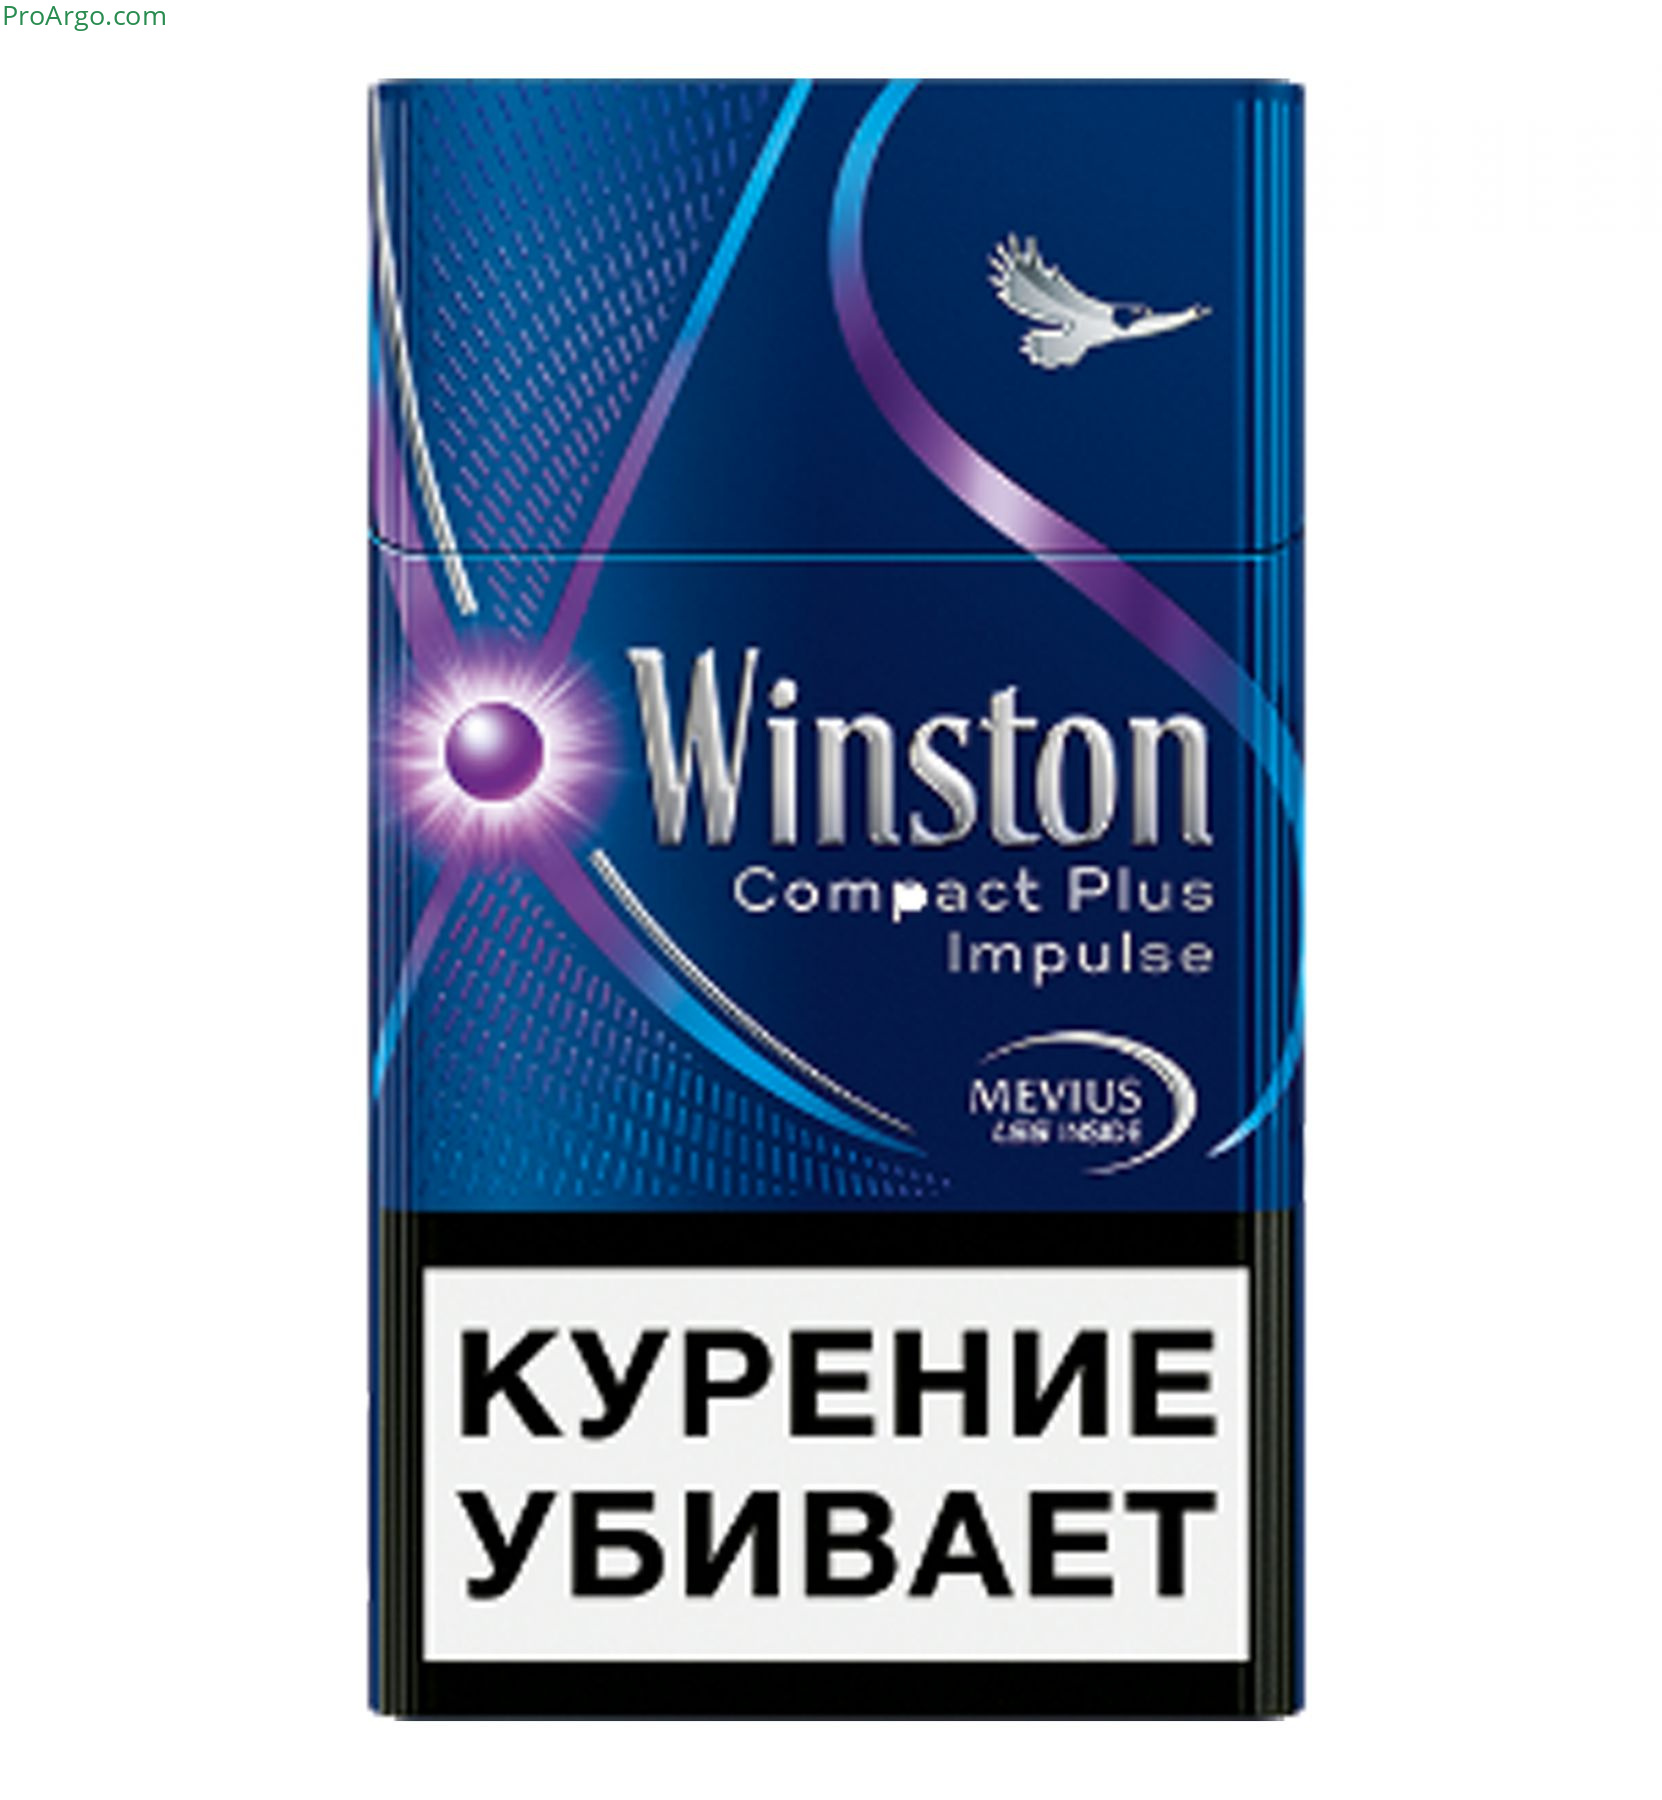 Winston Compact Plus Impulse (МРЦ 128)